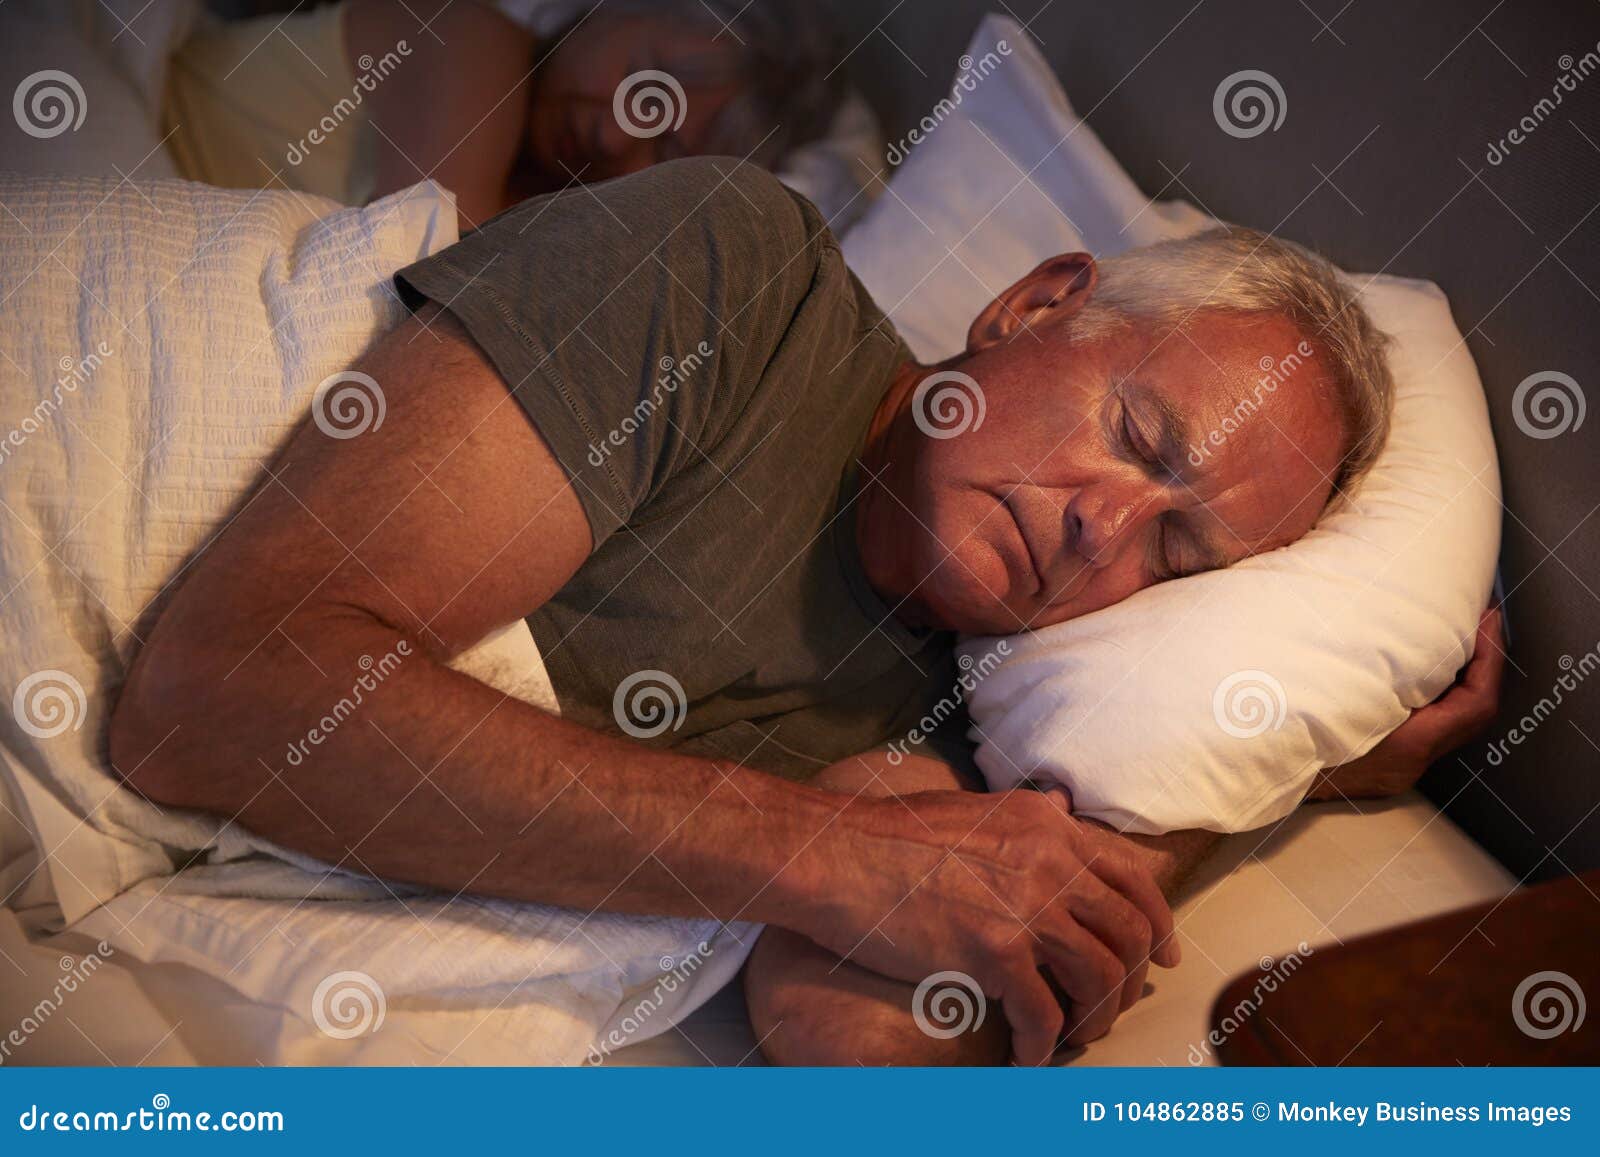 peaceful senior man asleep in bed at night